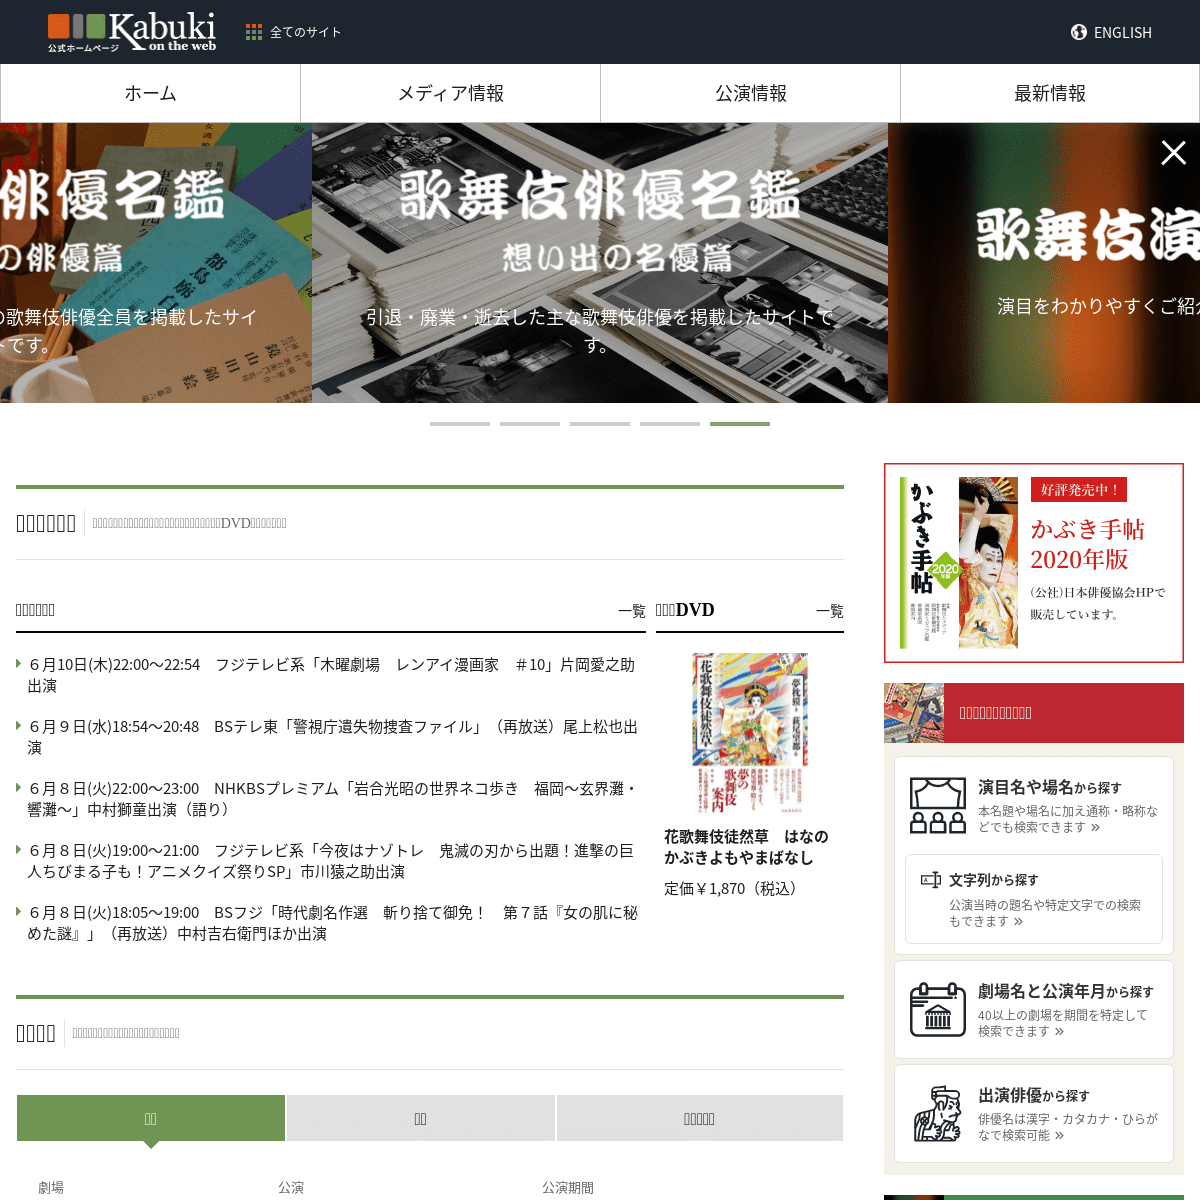 A complete backup of https://kabuki.ne.jp